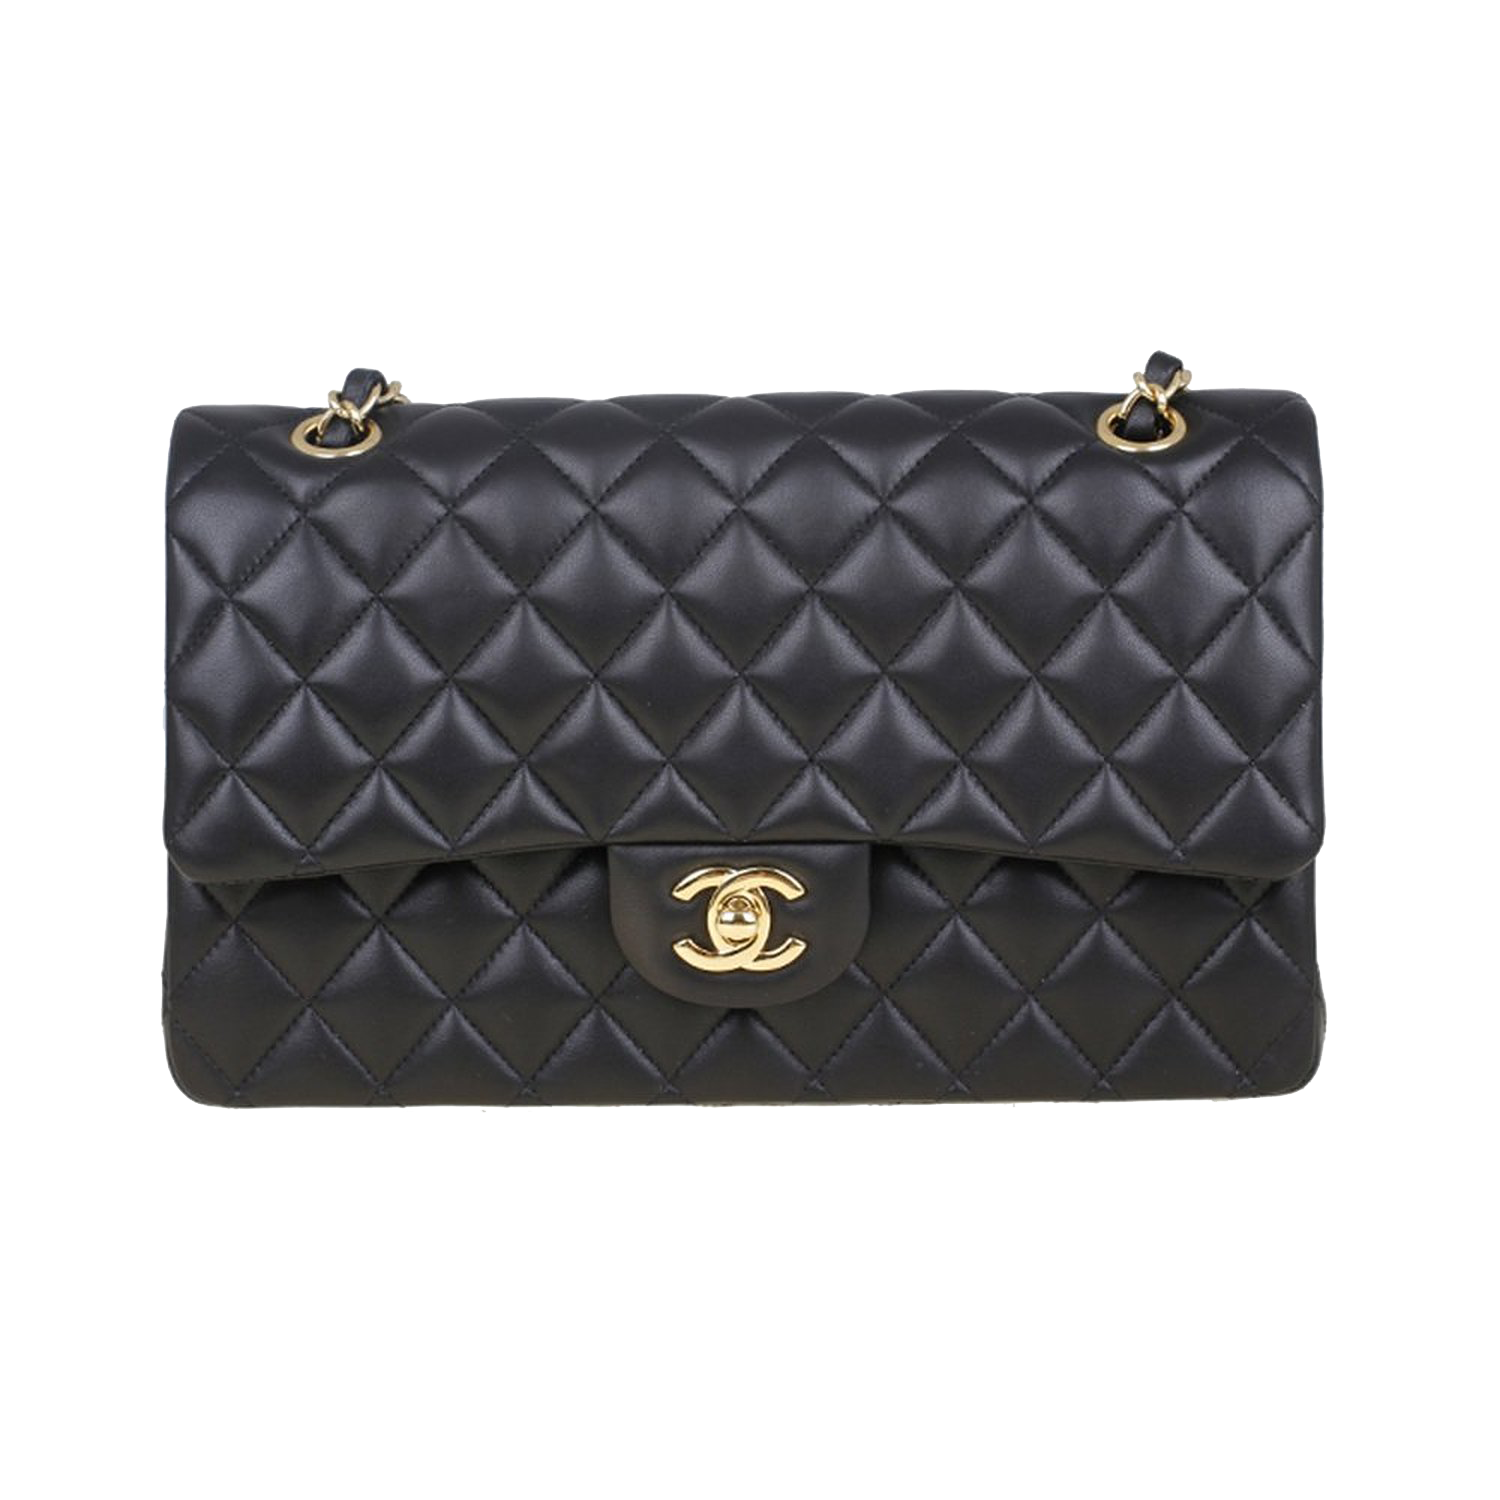 Download Fashion Bag Moschino Black Handbag Lingge Chanel HQ PNG Image ...